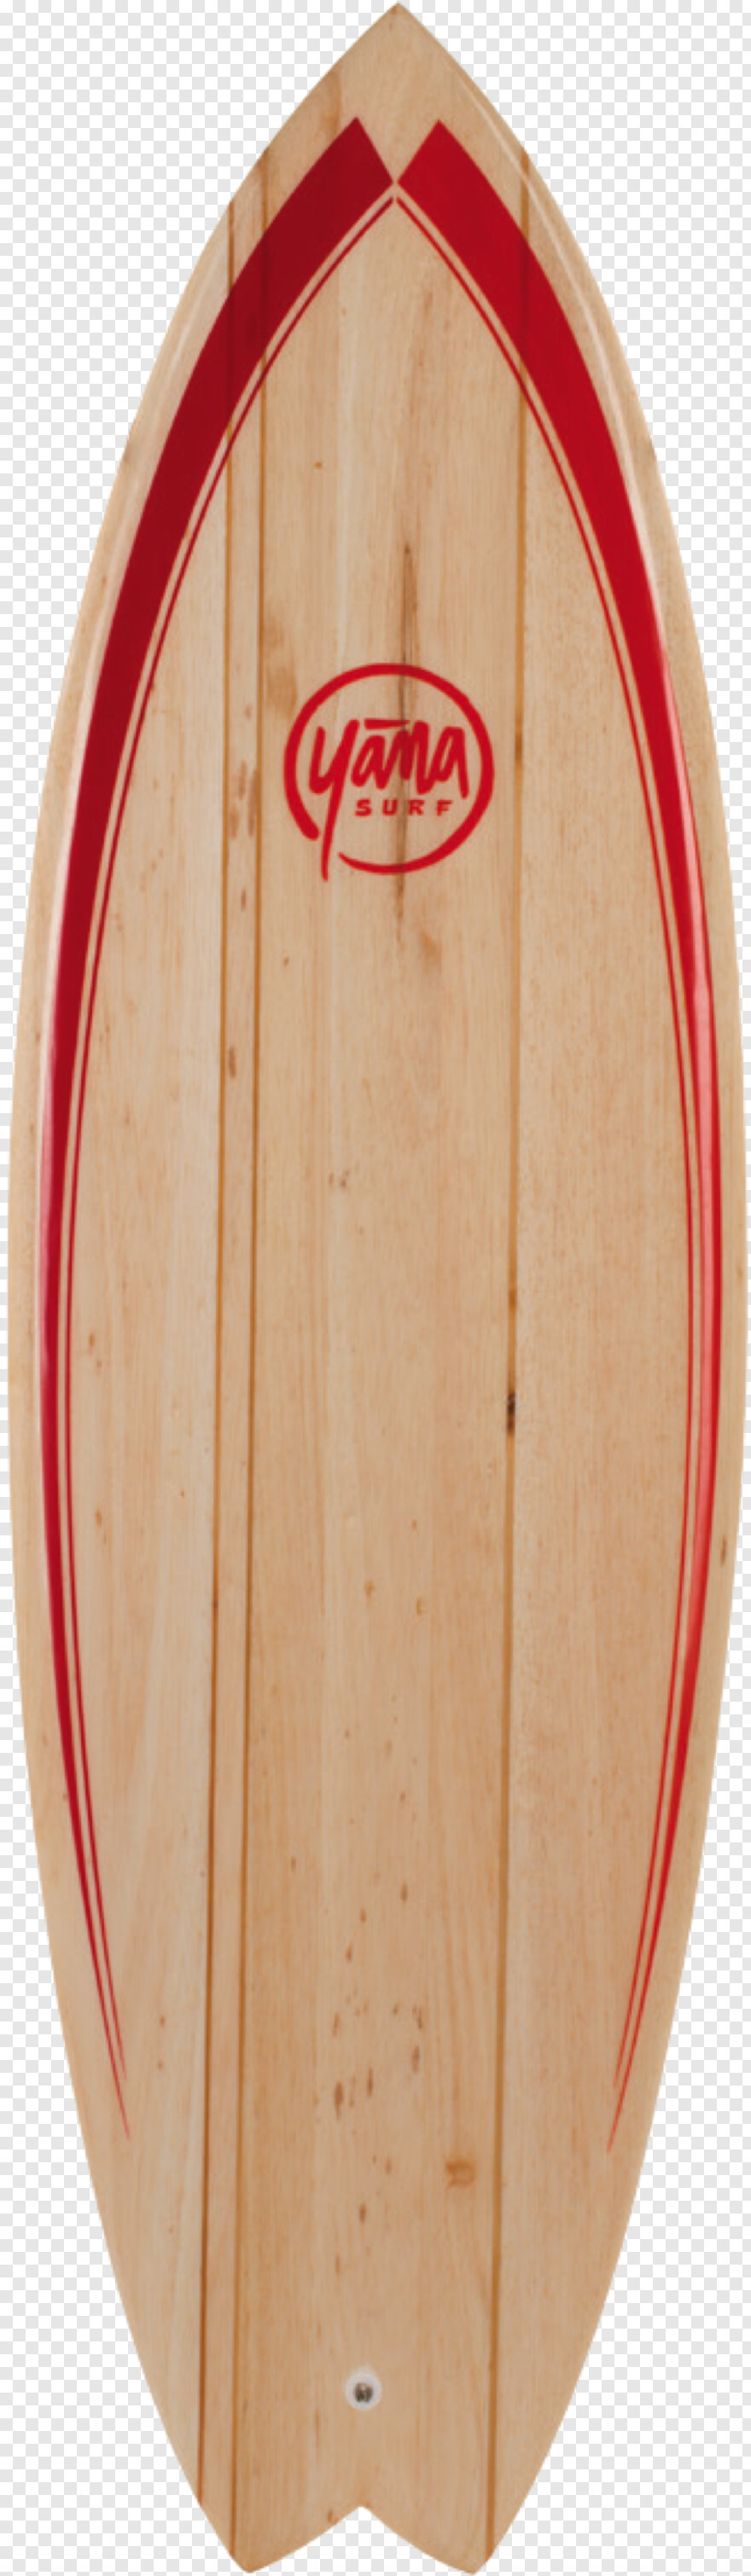 surfboard # 832189